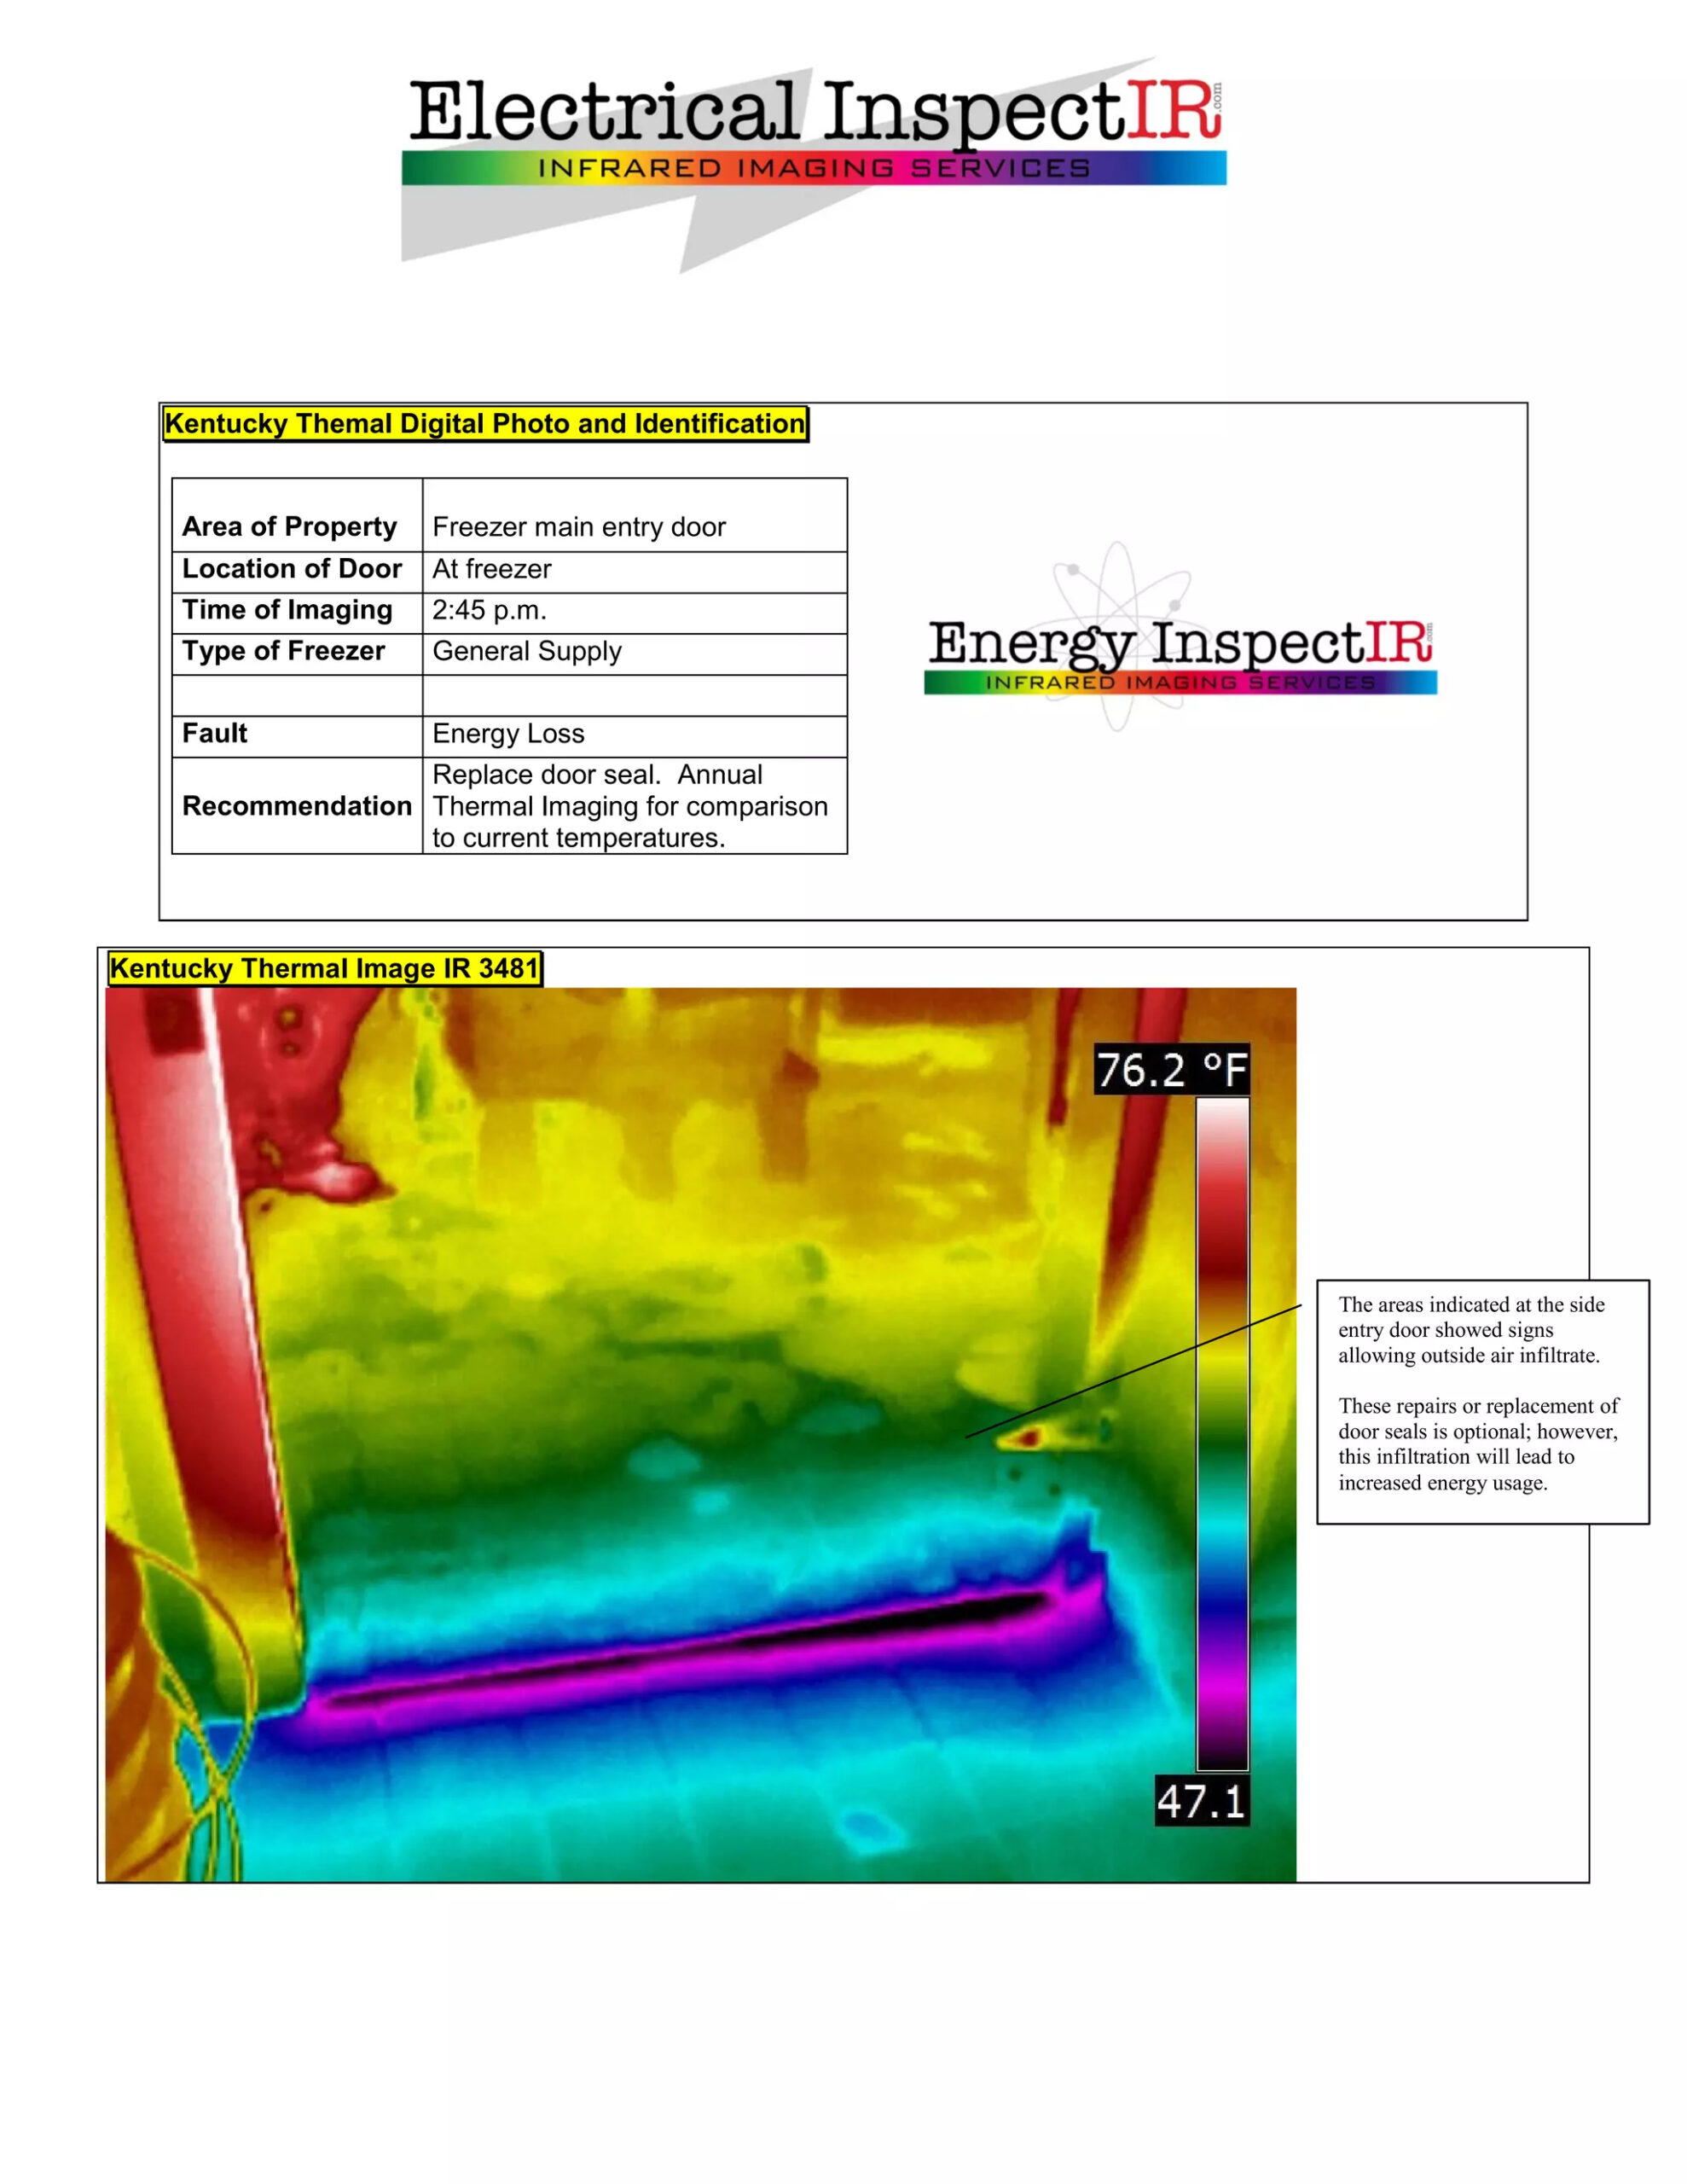 Electrical inspect ir sample report Inside Thermal Imaging Report Template